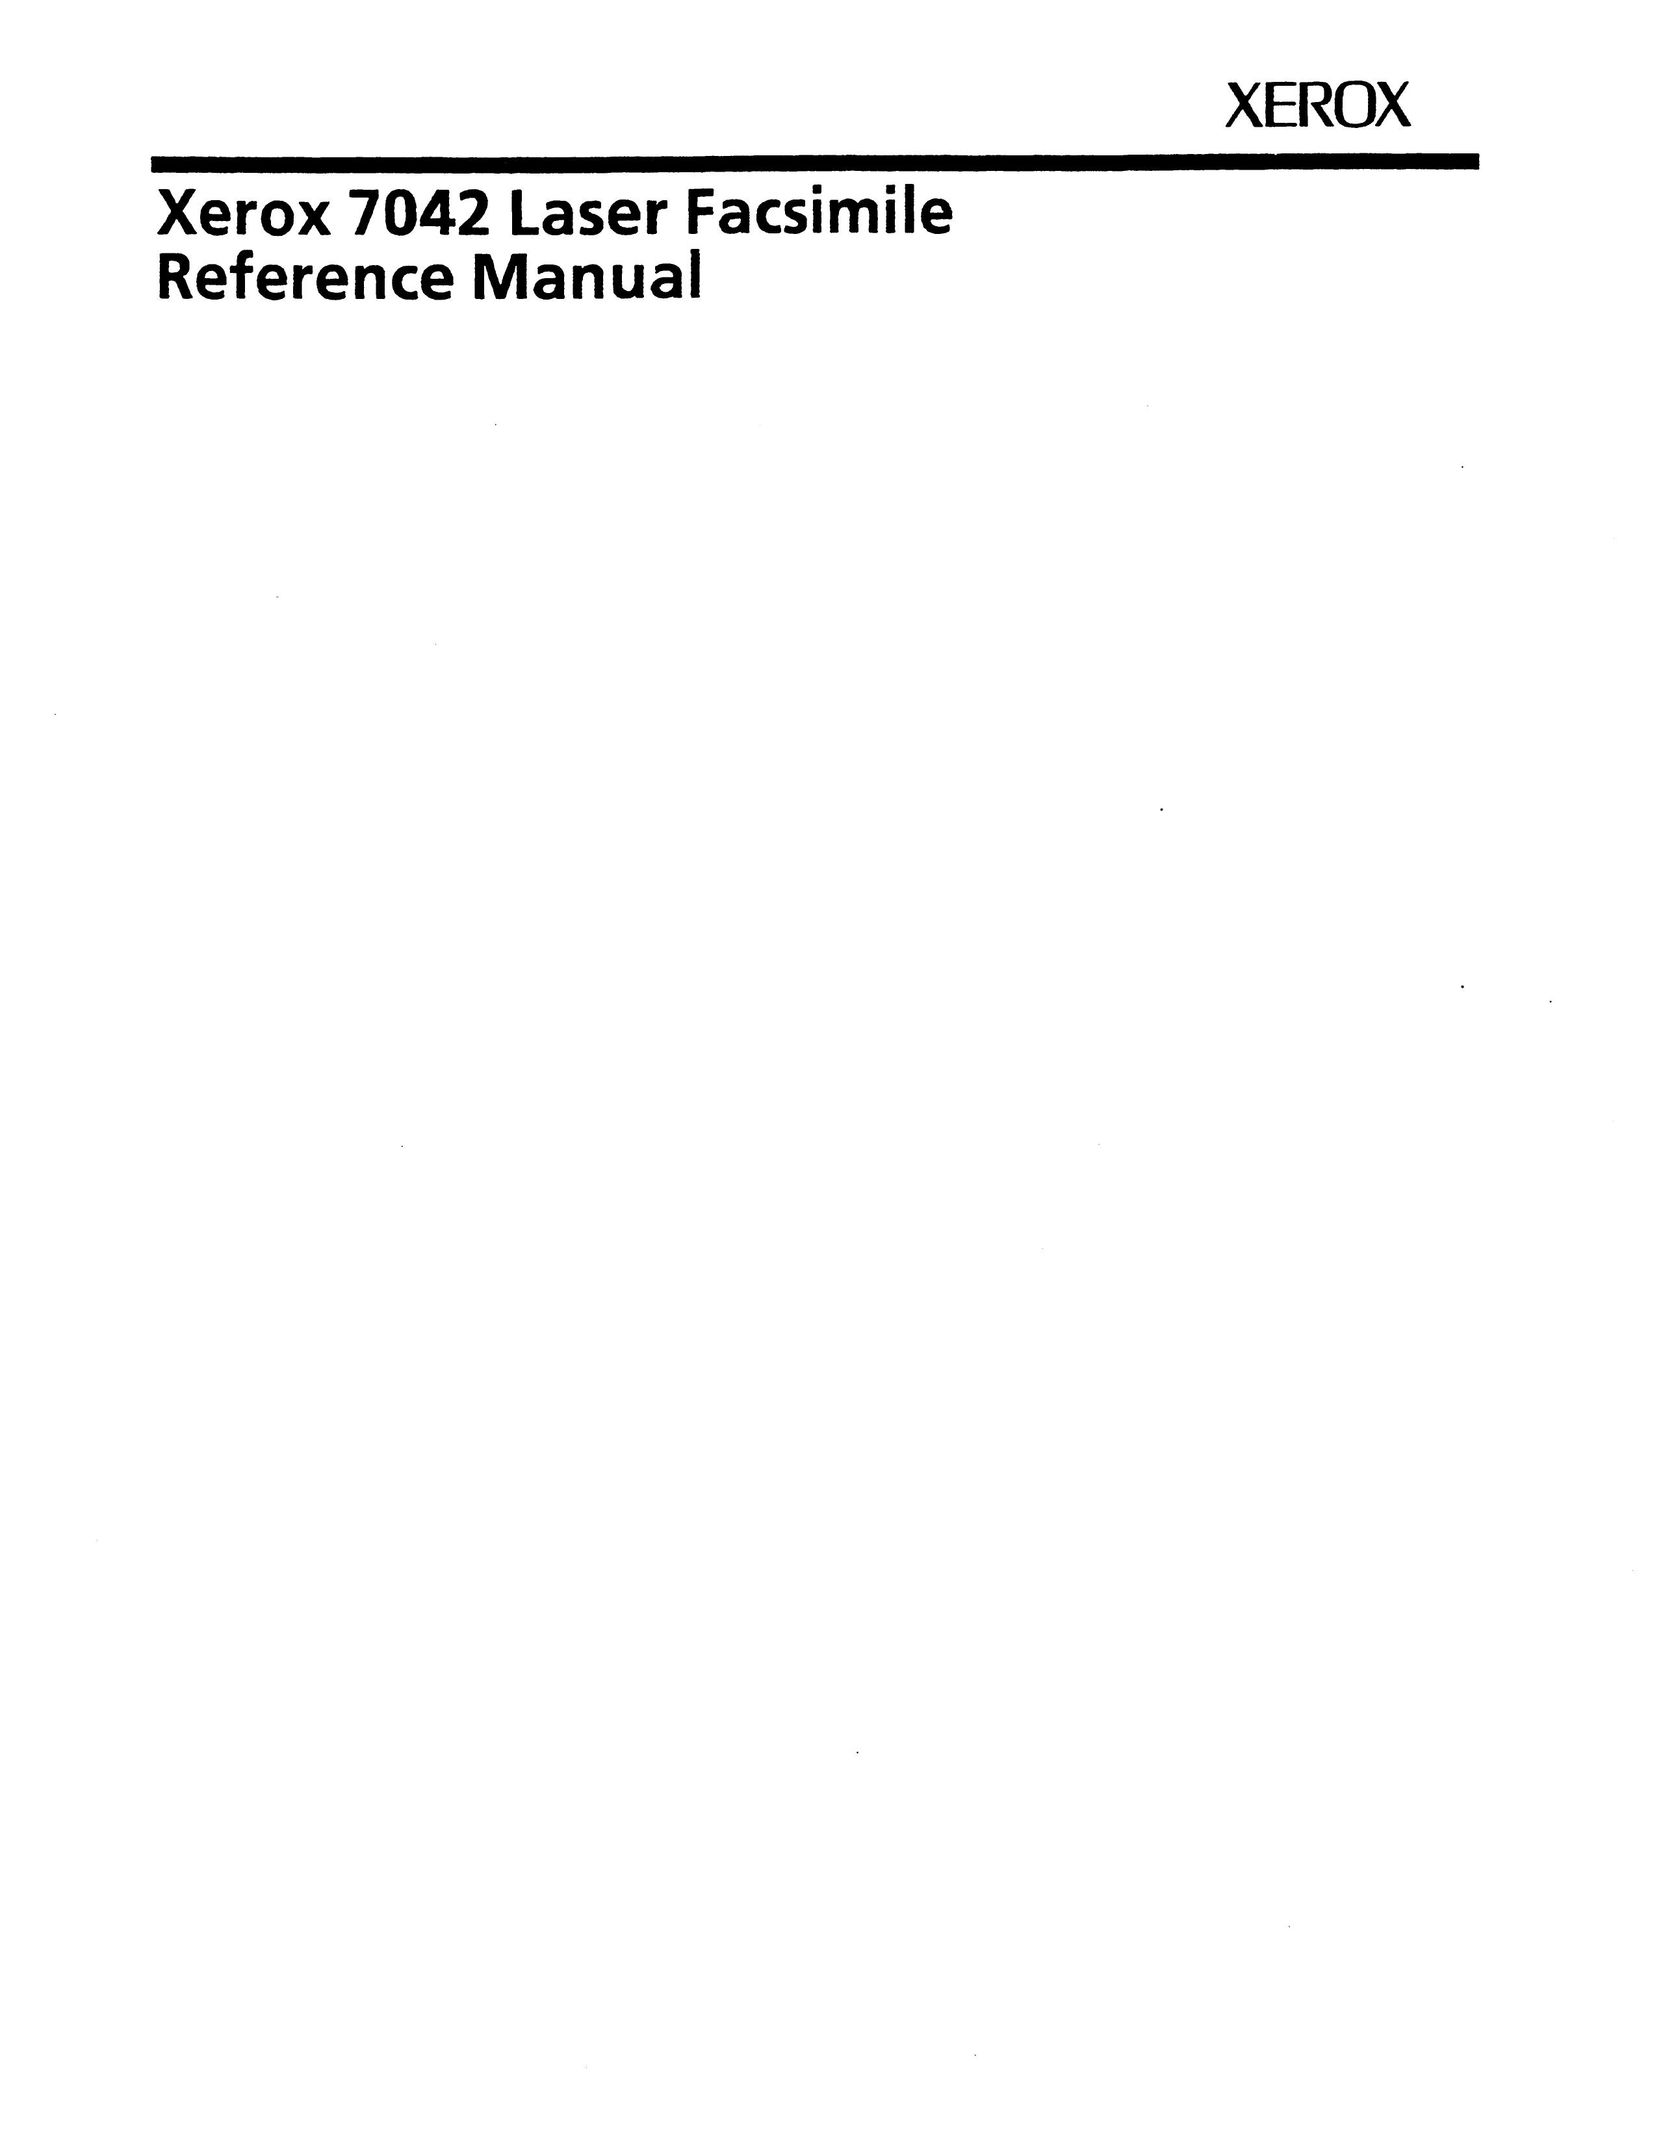 Xerox 7042 Fax Machine User Manual